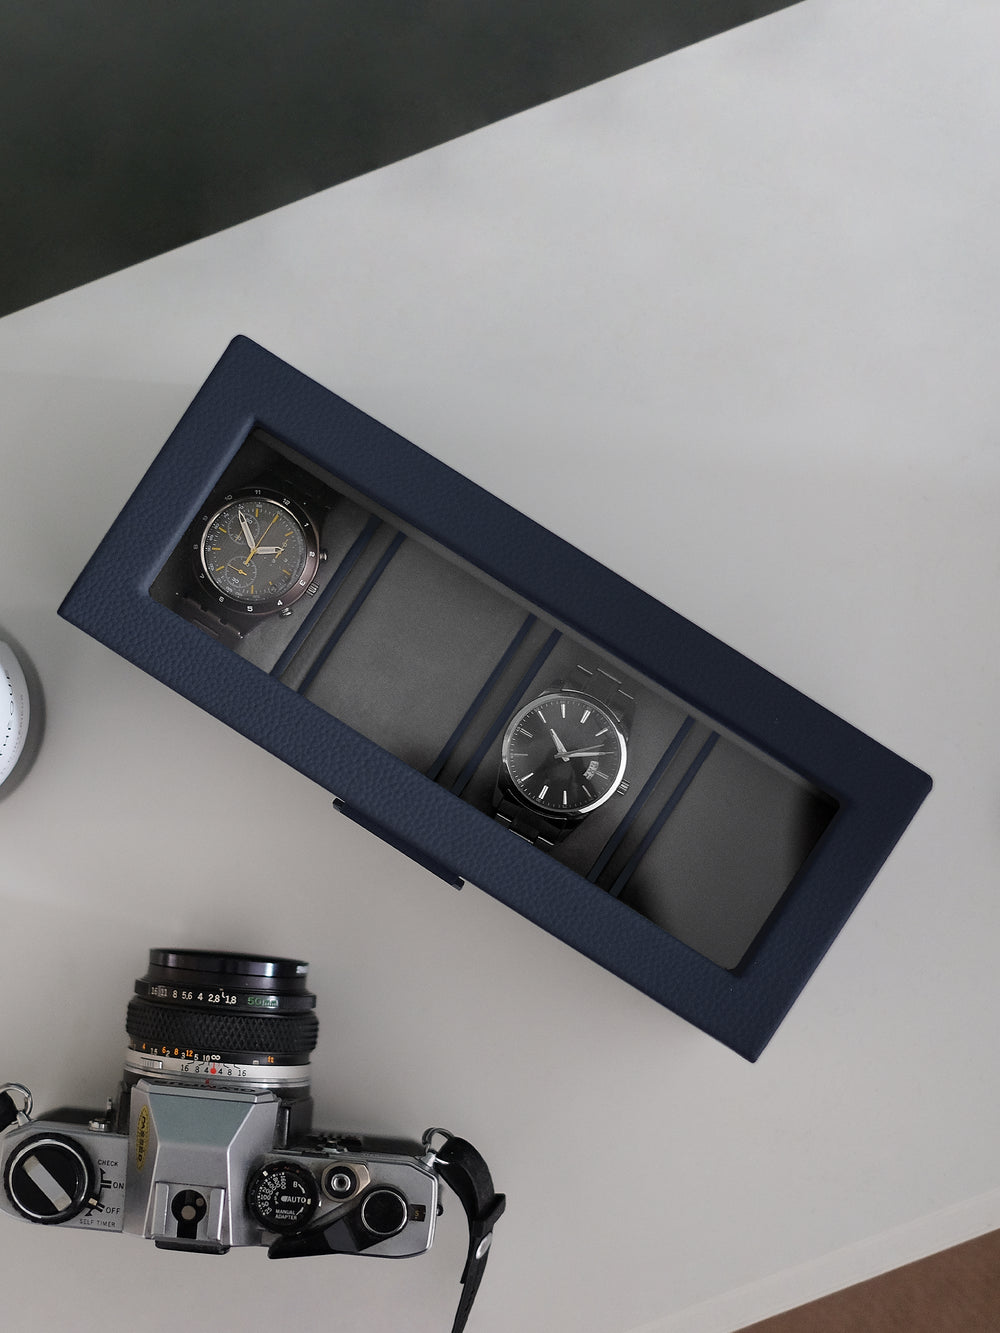 Stackers | 4 piece Watch Box - Navy Blue & Grey